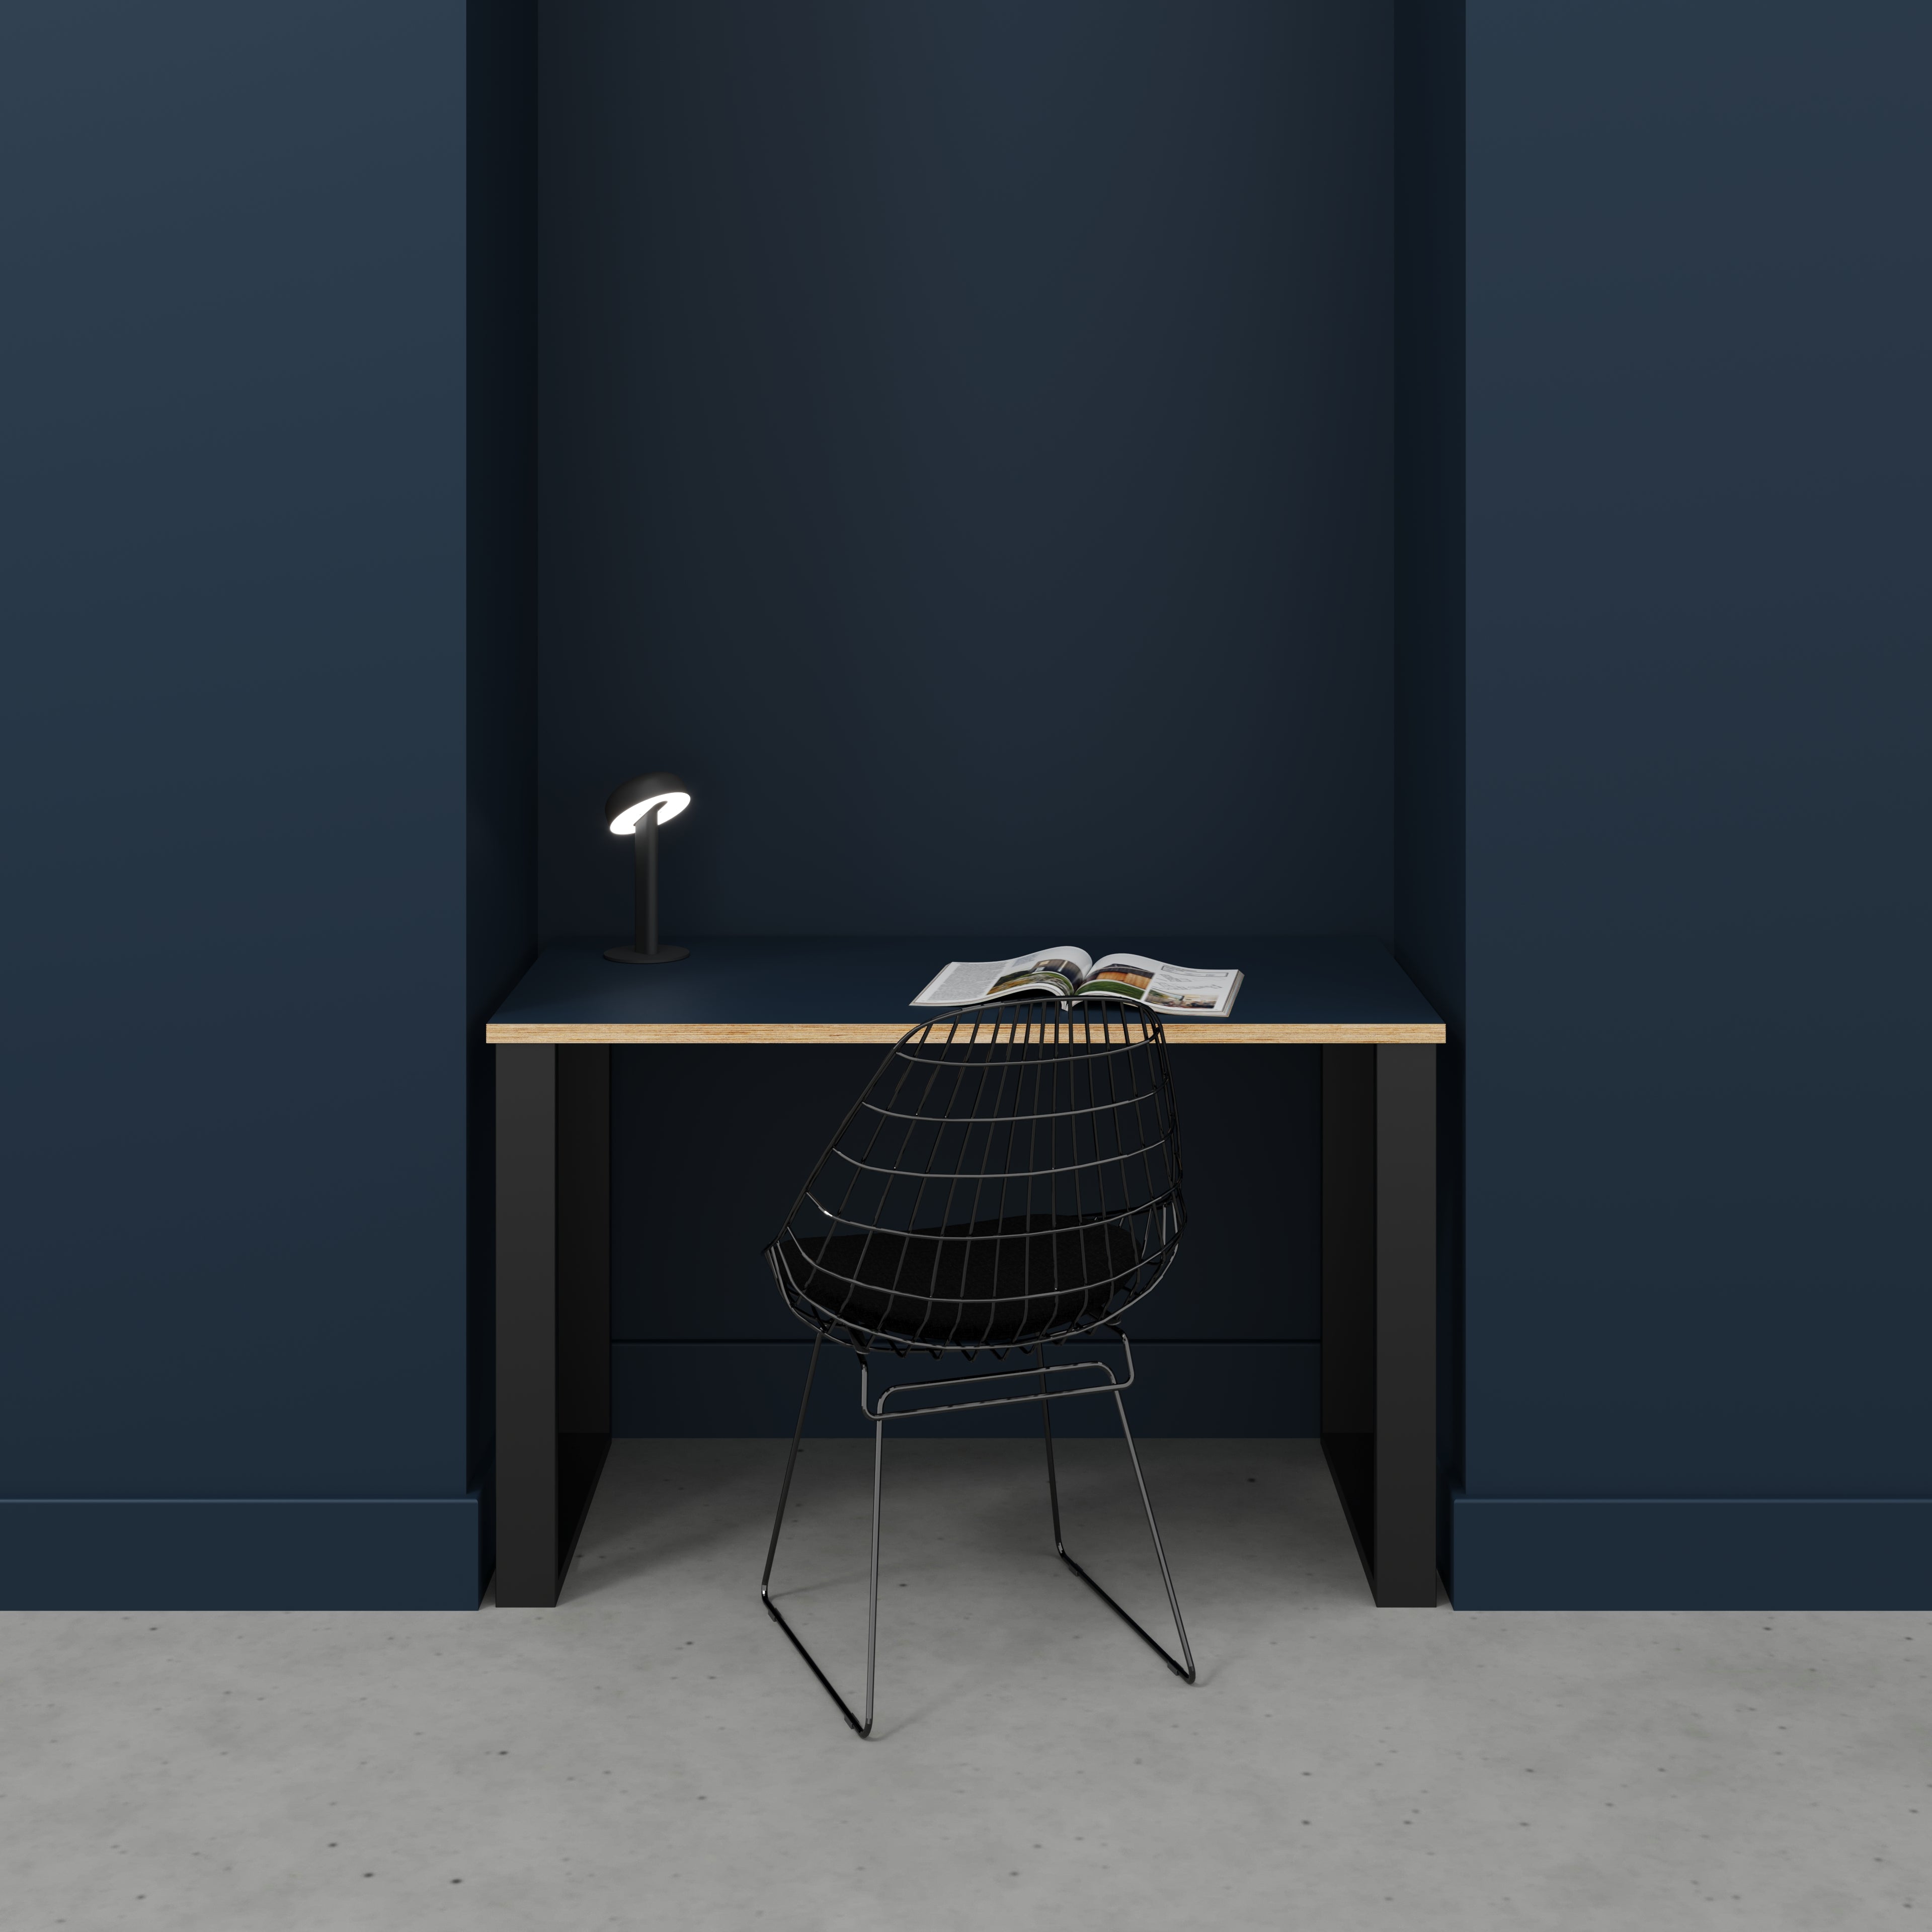 Desk with Black Industrial Legs - Formica Night Sea Blue - 1200(w) x 600(d) x 735(h)